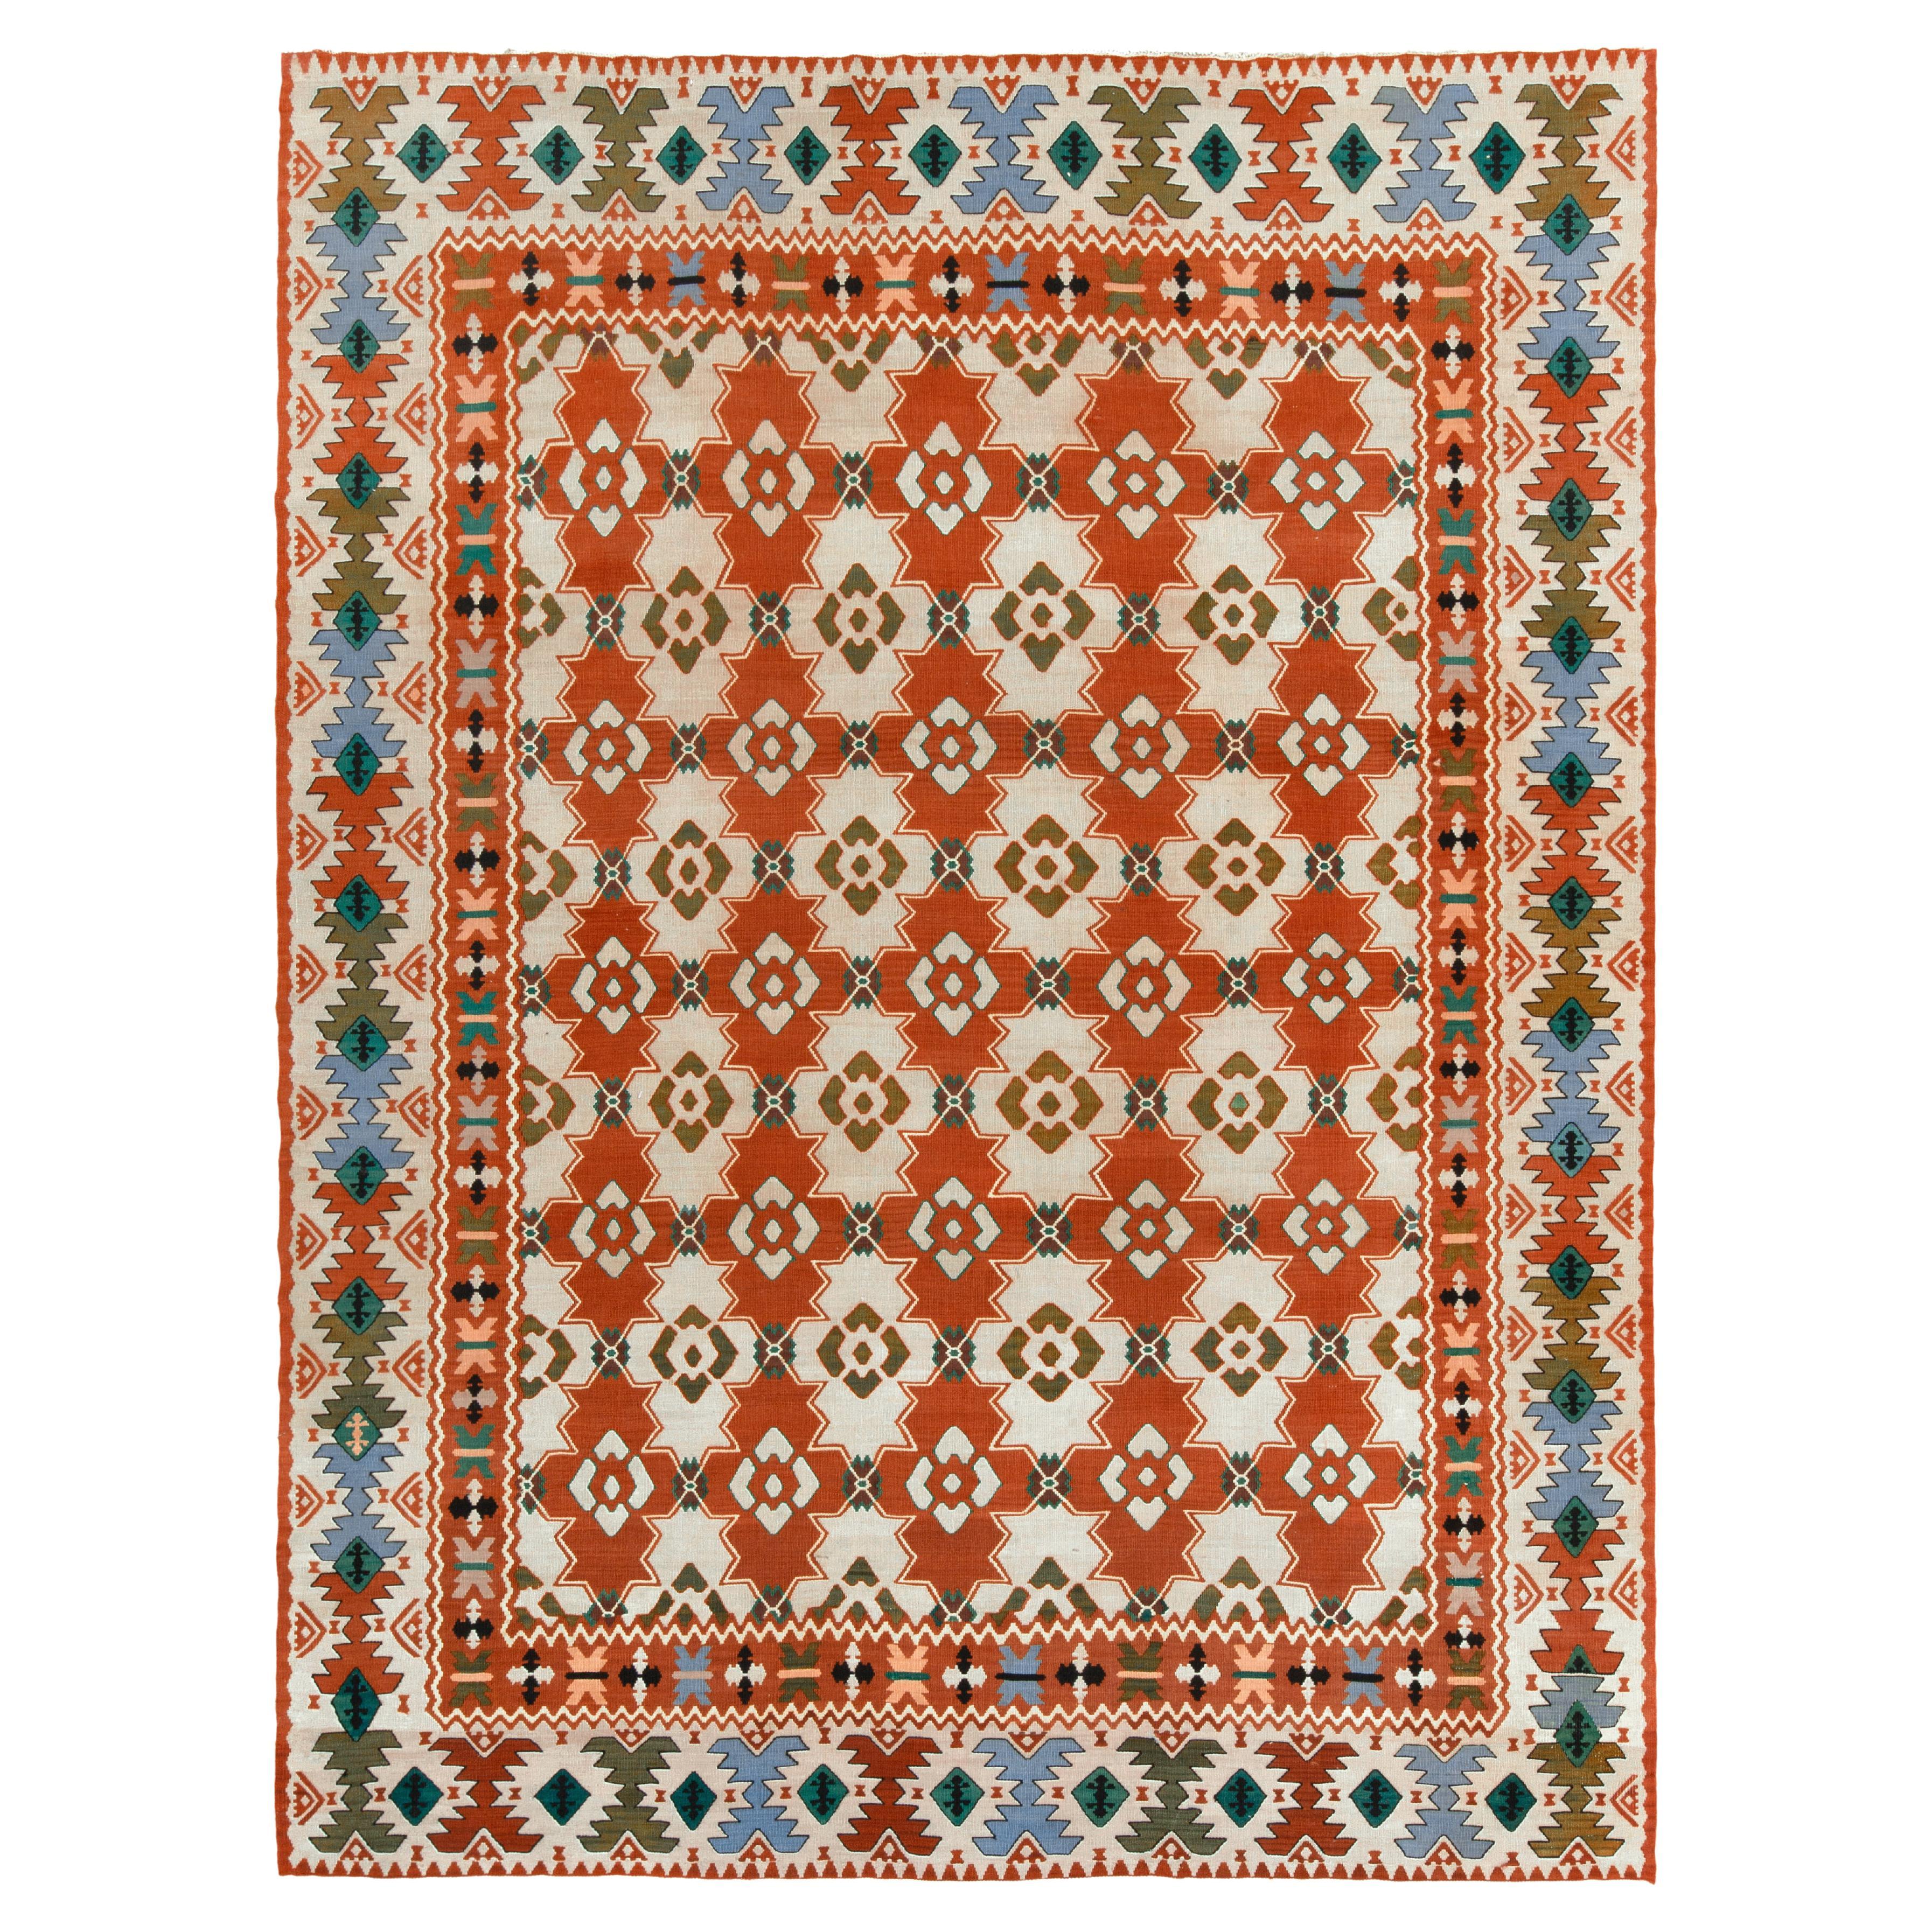 Handwoven Vintage Turkish Kilim Rug in Orange Tribal Geometric by Rug & Kilim For Sale